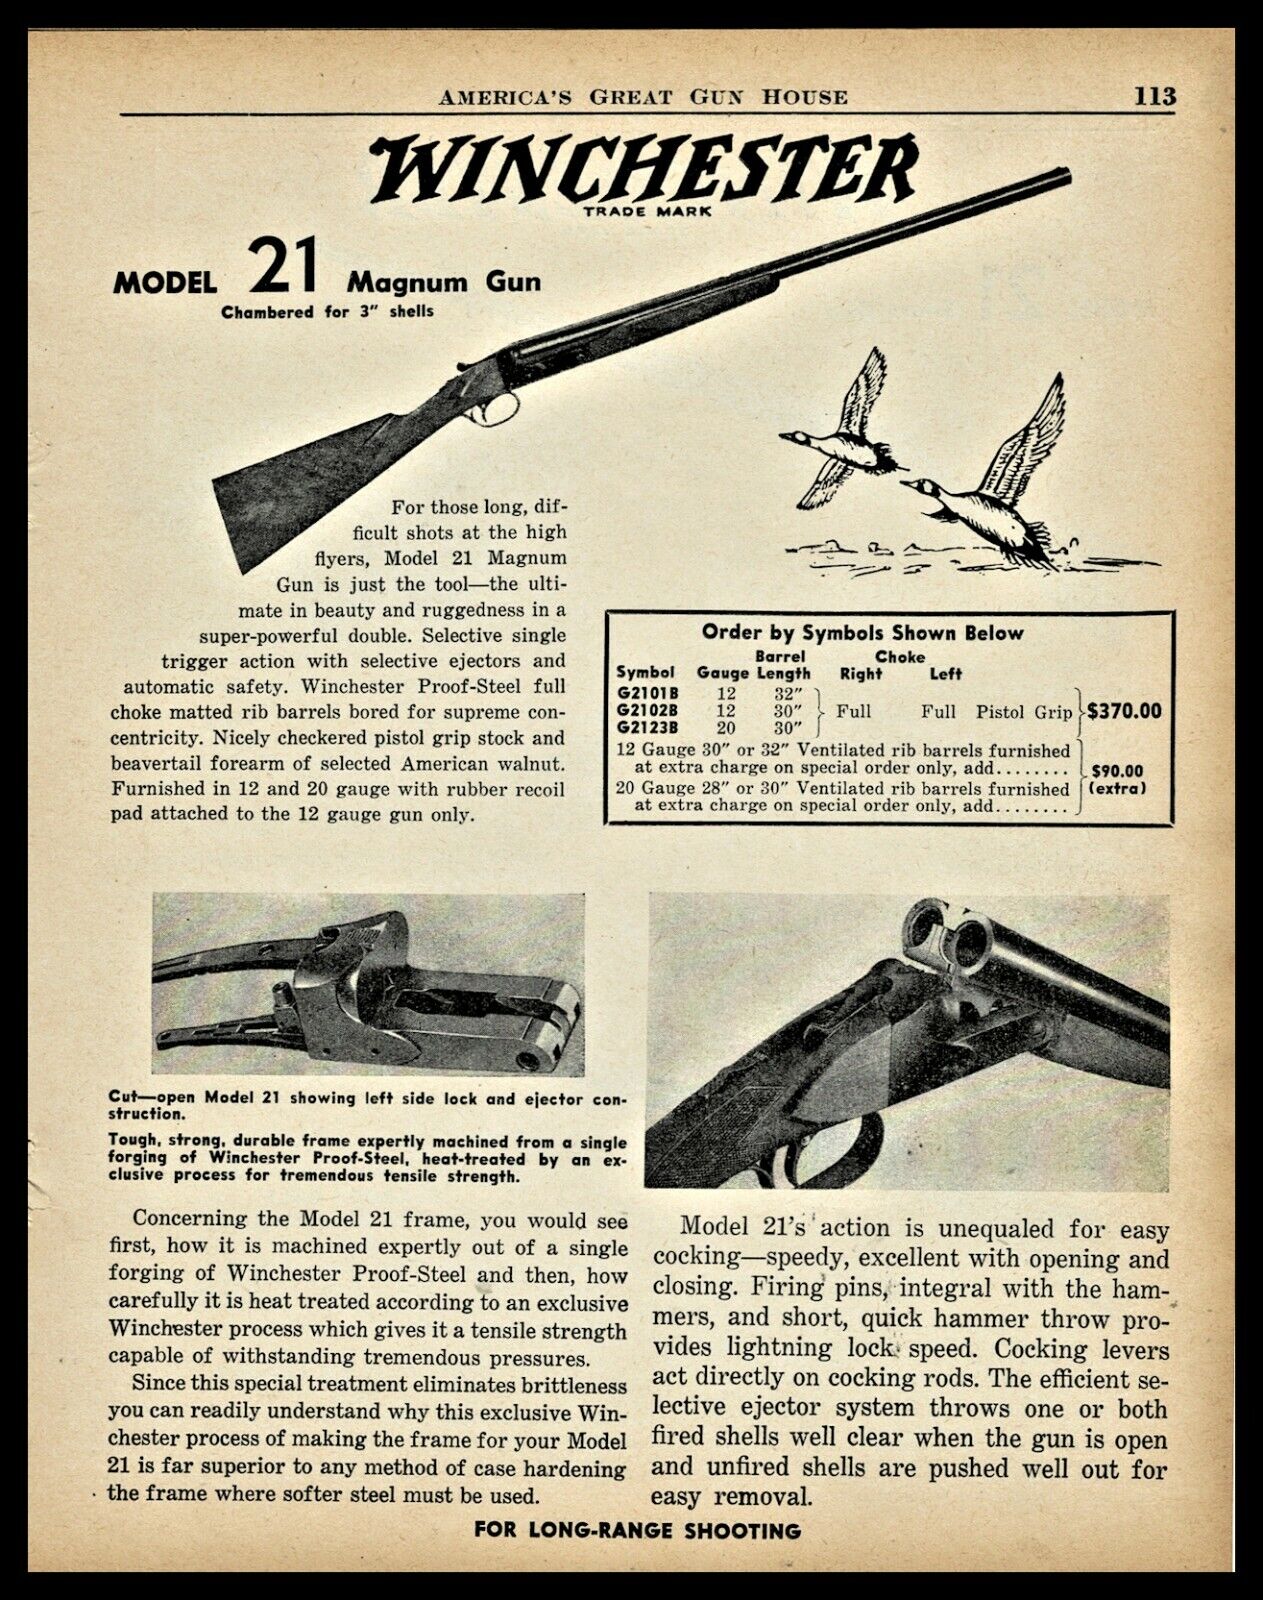 1955 WINCHESTER Model 21 Magnum Shotgun shown with Original Price AD